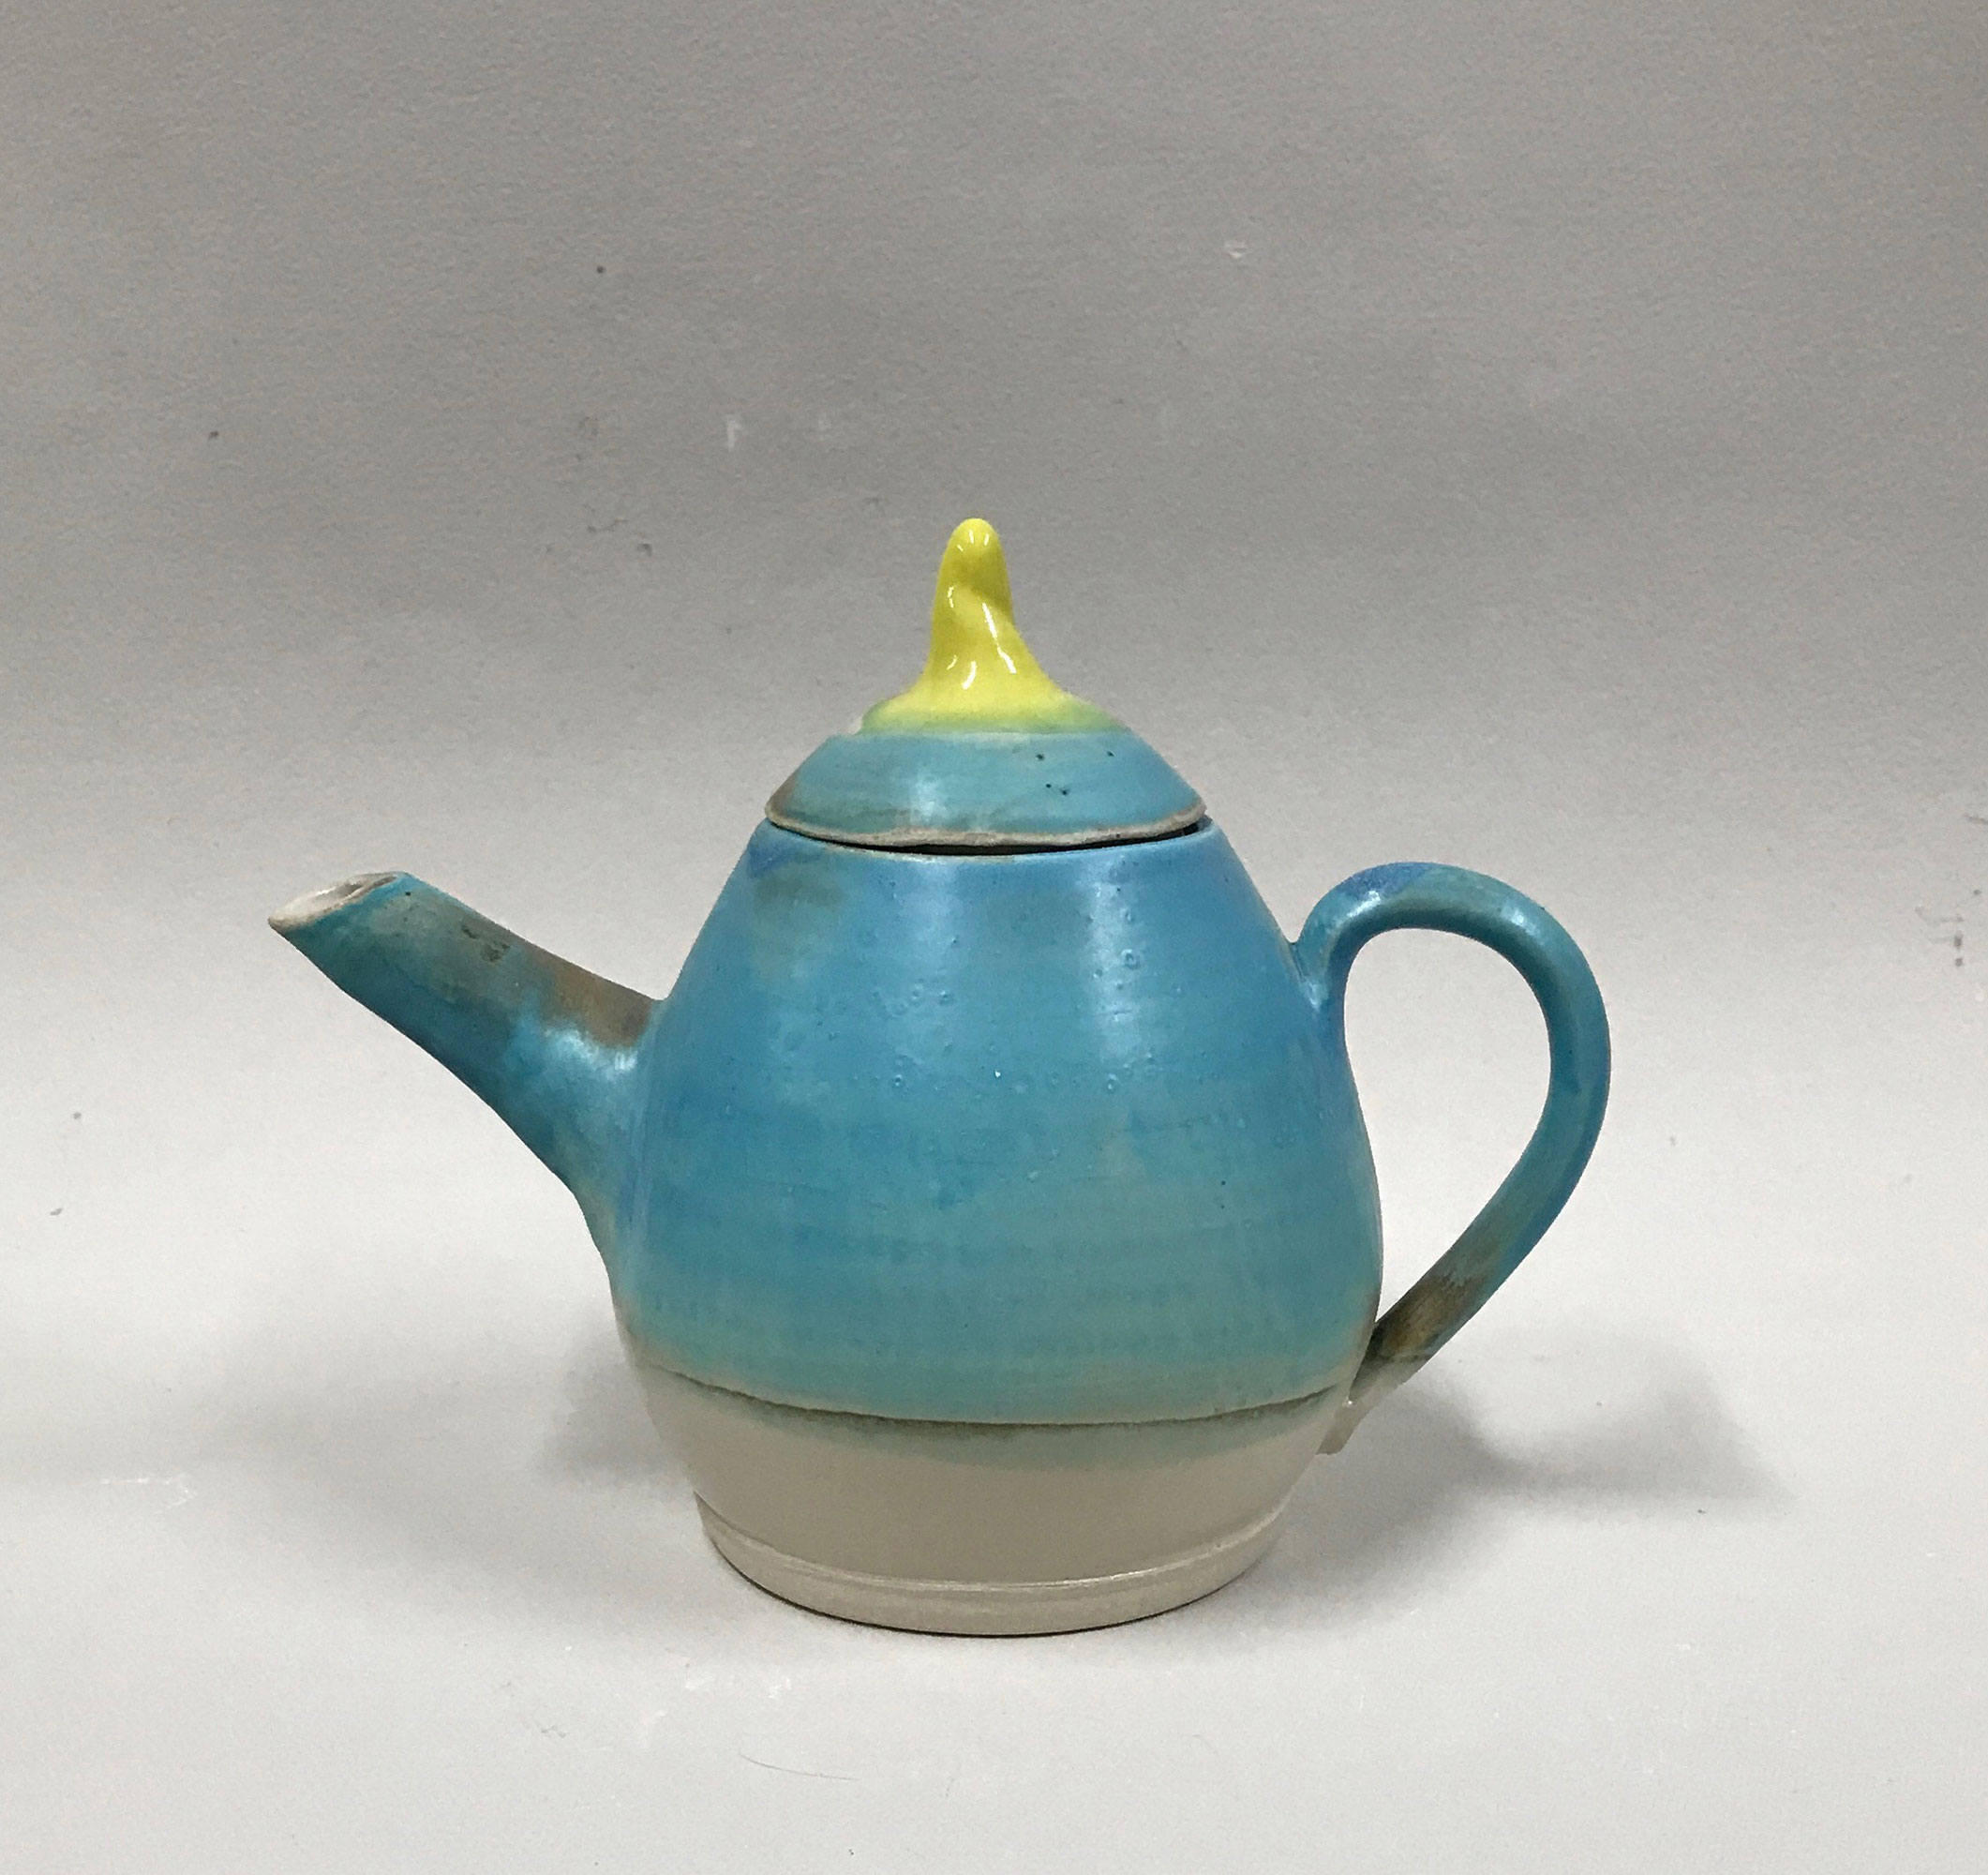 Turquoise tea pot